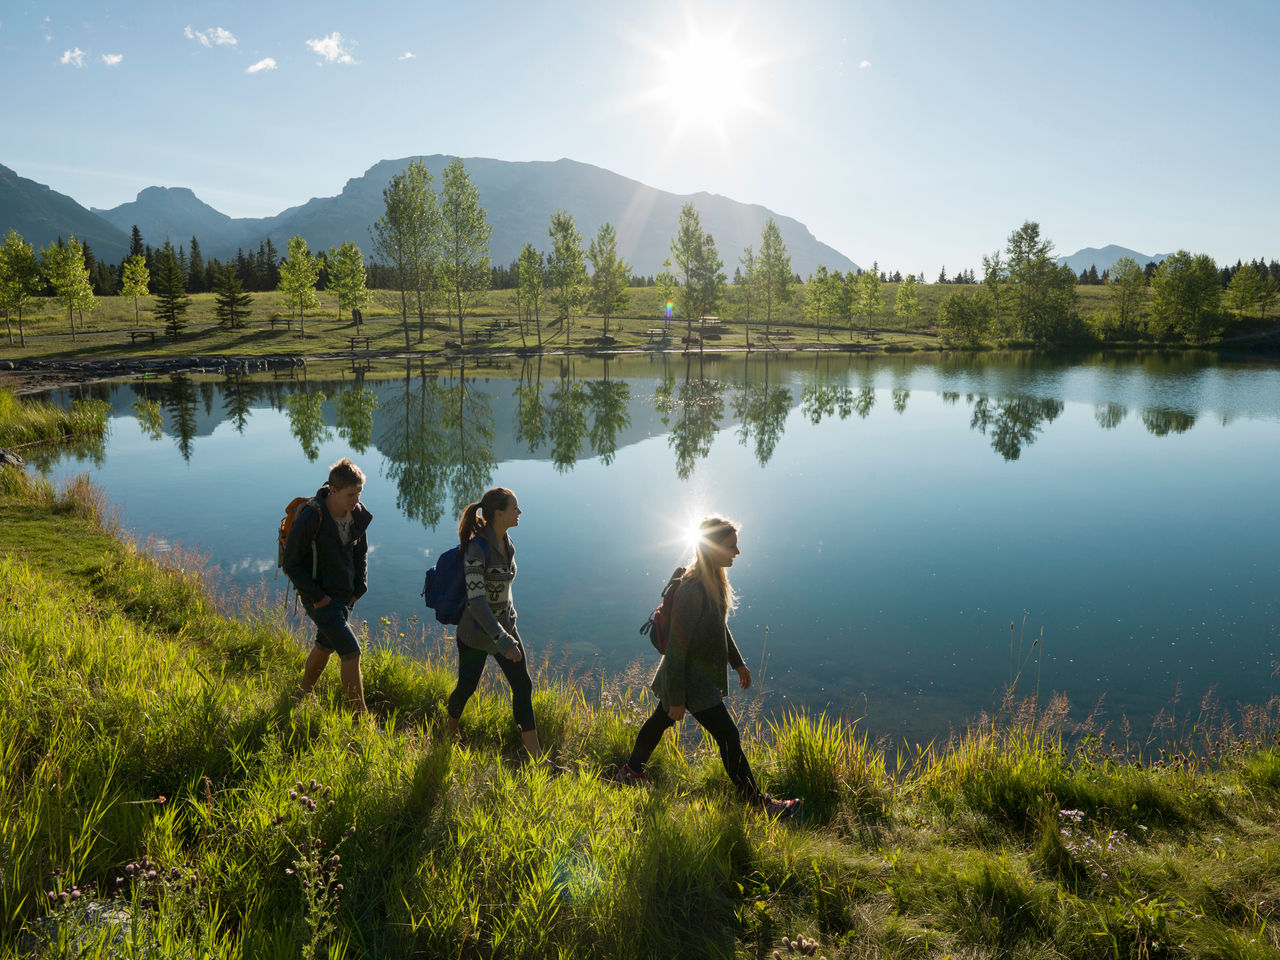 Three hikers walk along shore of mountain lake - stock photo